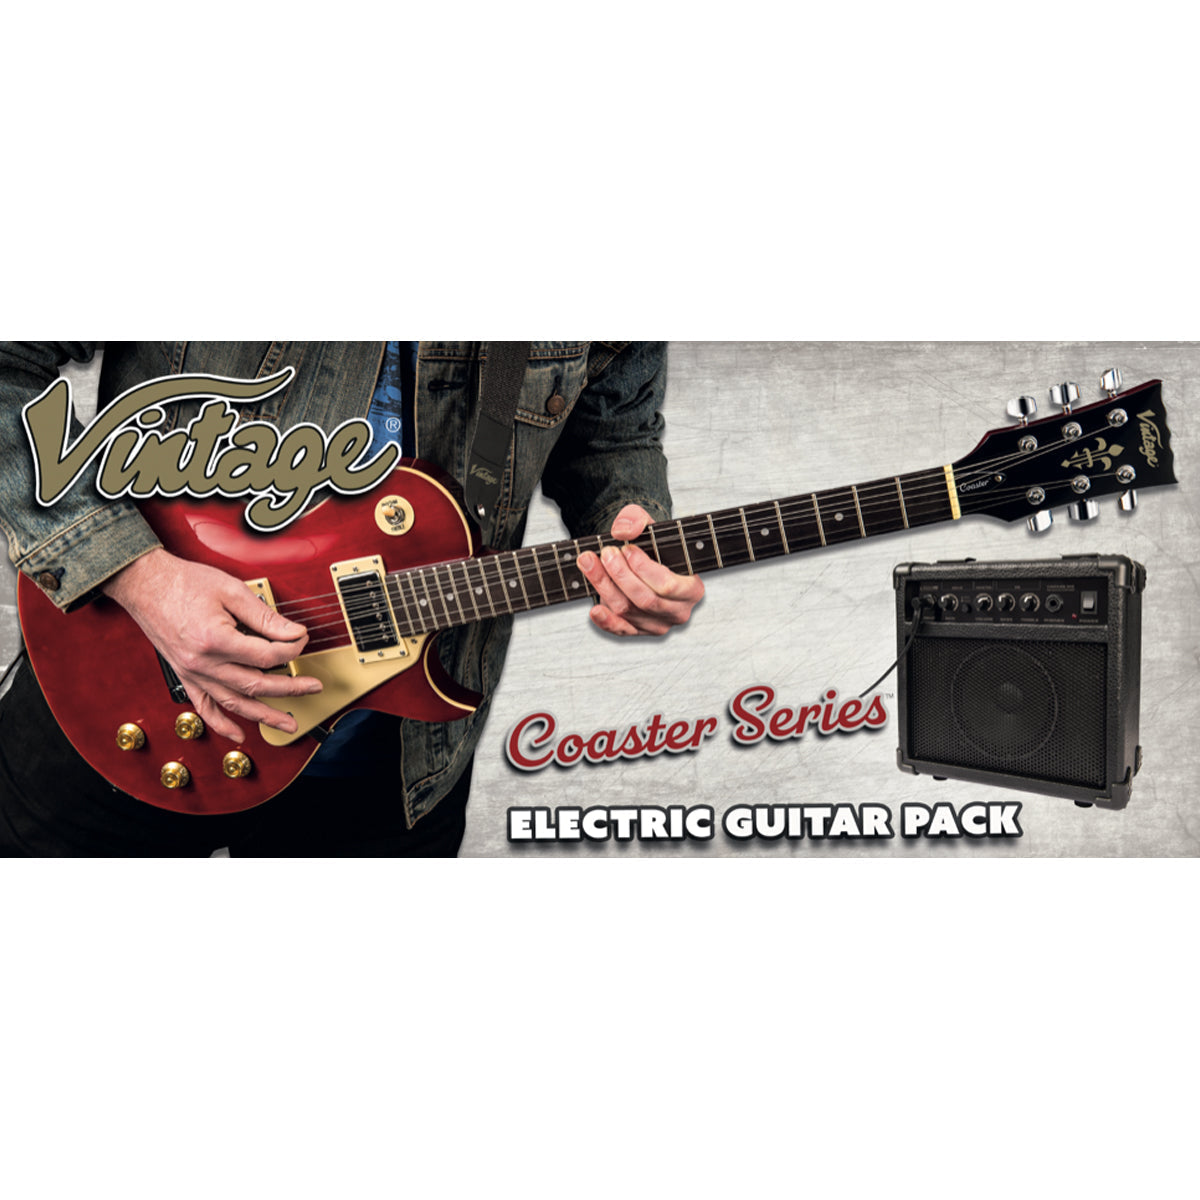 Vintage V10 Coaster Series Electric Guitar Pack ~ Wine Red, Electric Guitar for sale at Richards Guitars.